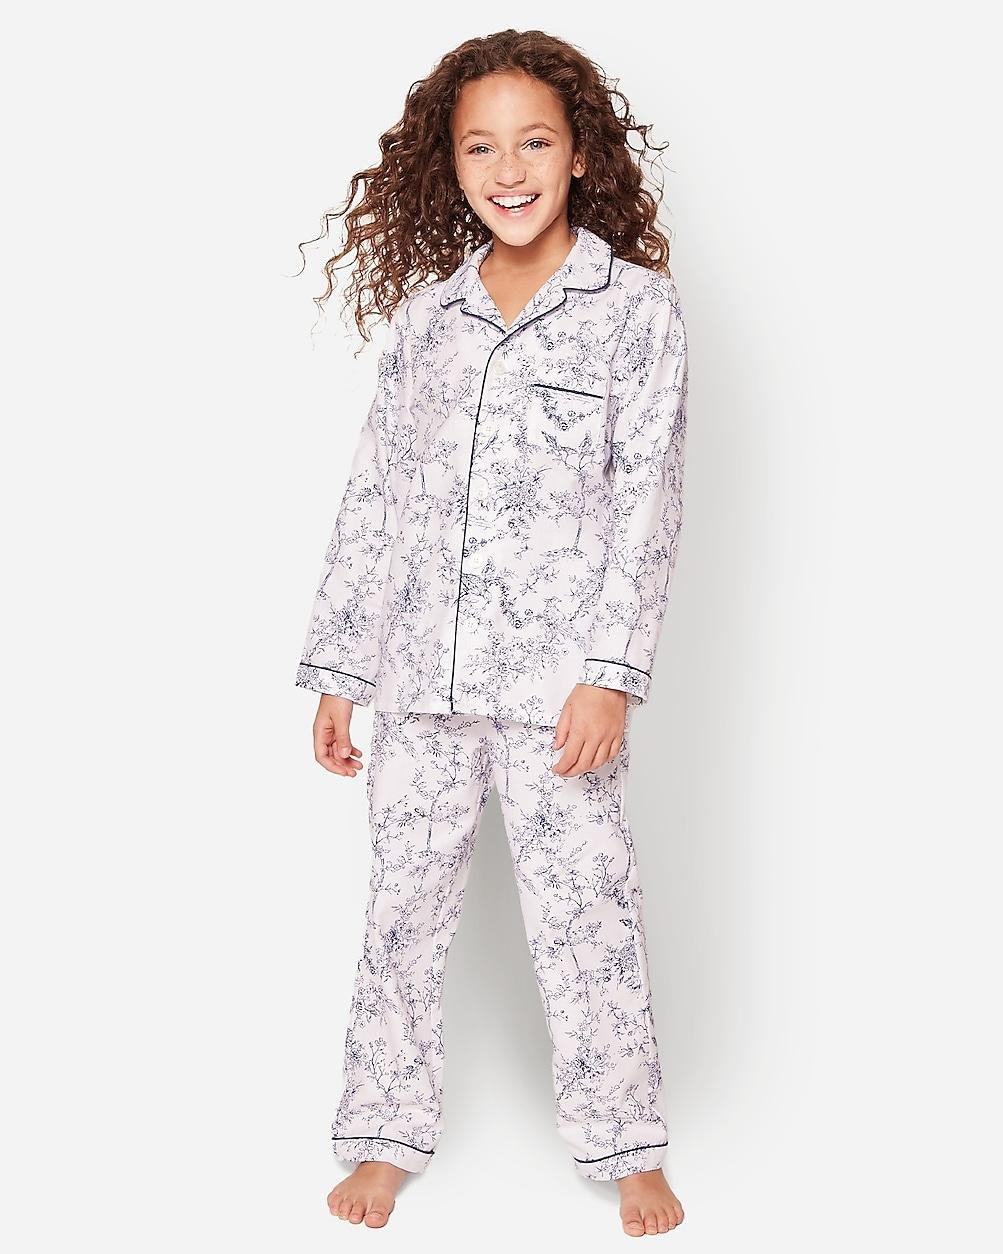 Petite Plume™ girls' pajama set in stripe by J.CREW